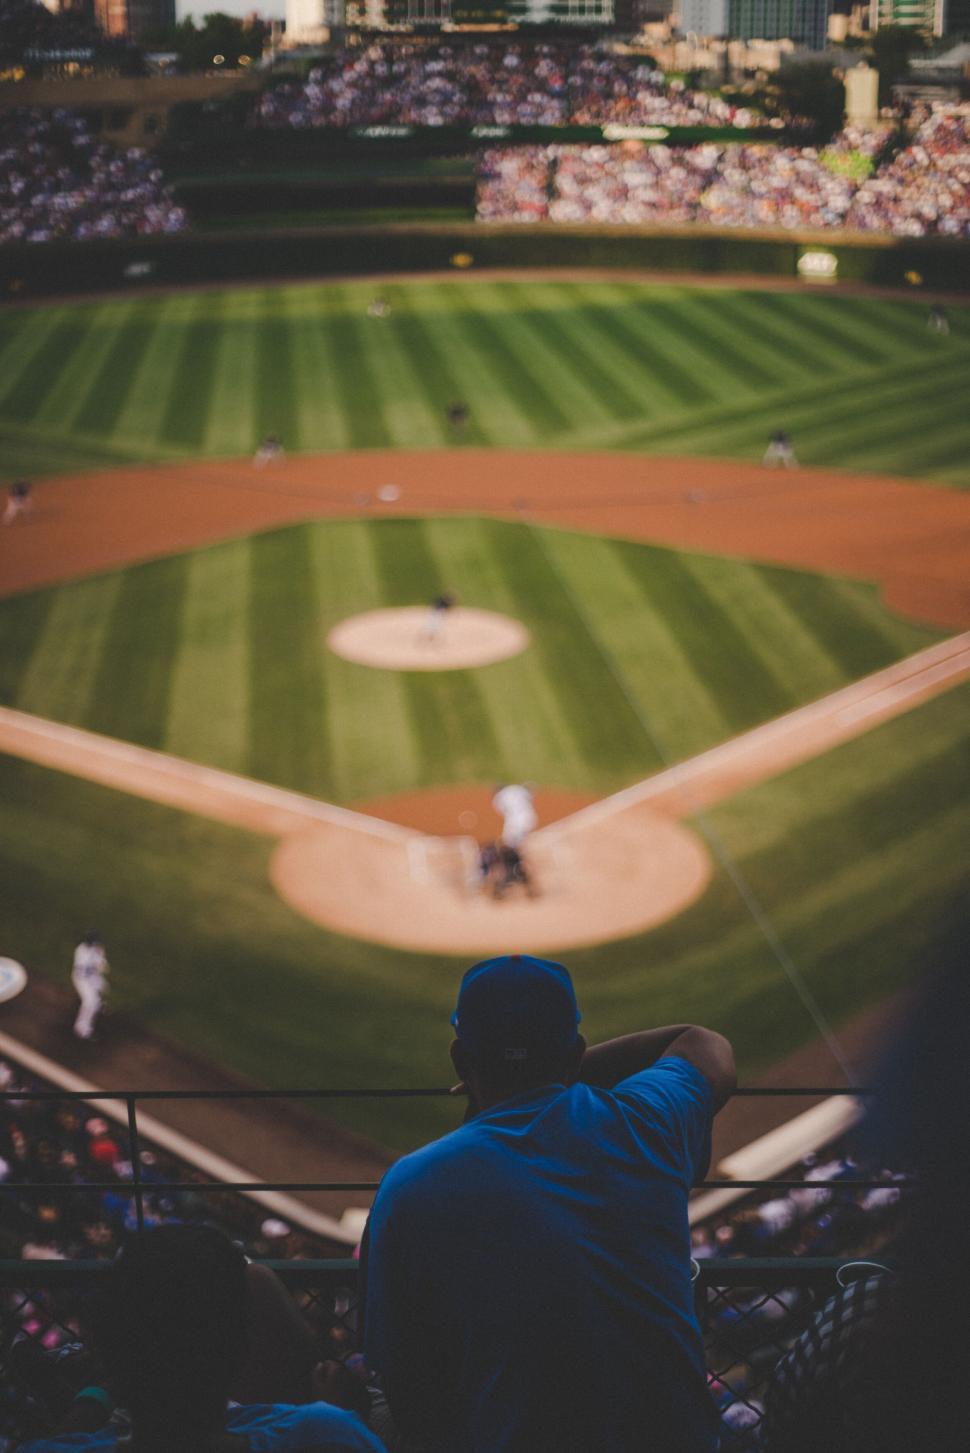 Free Image of Baseball game viewed from stadium seats 